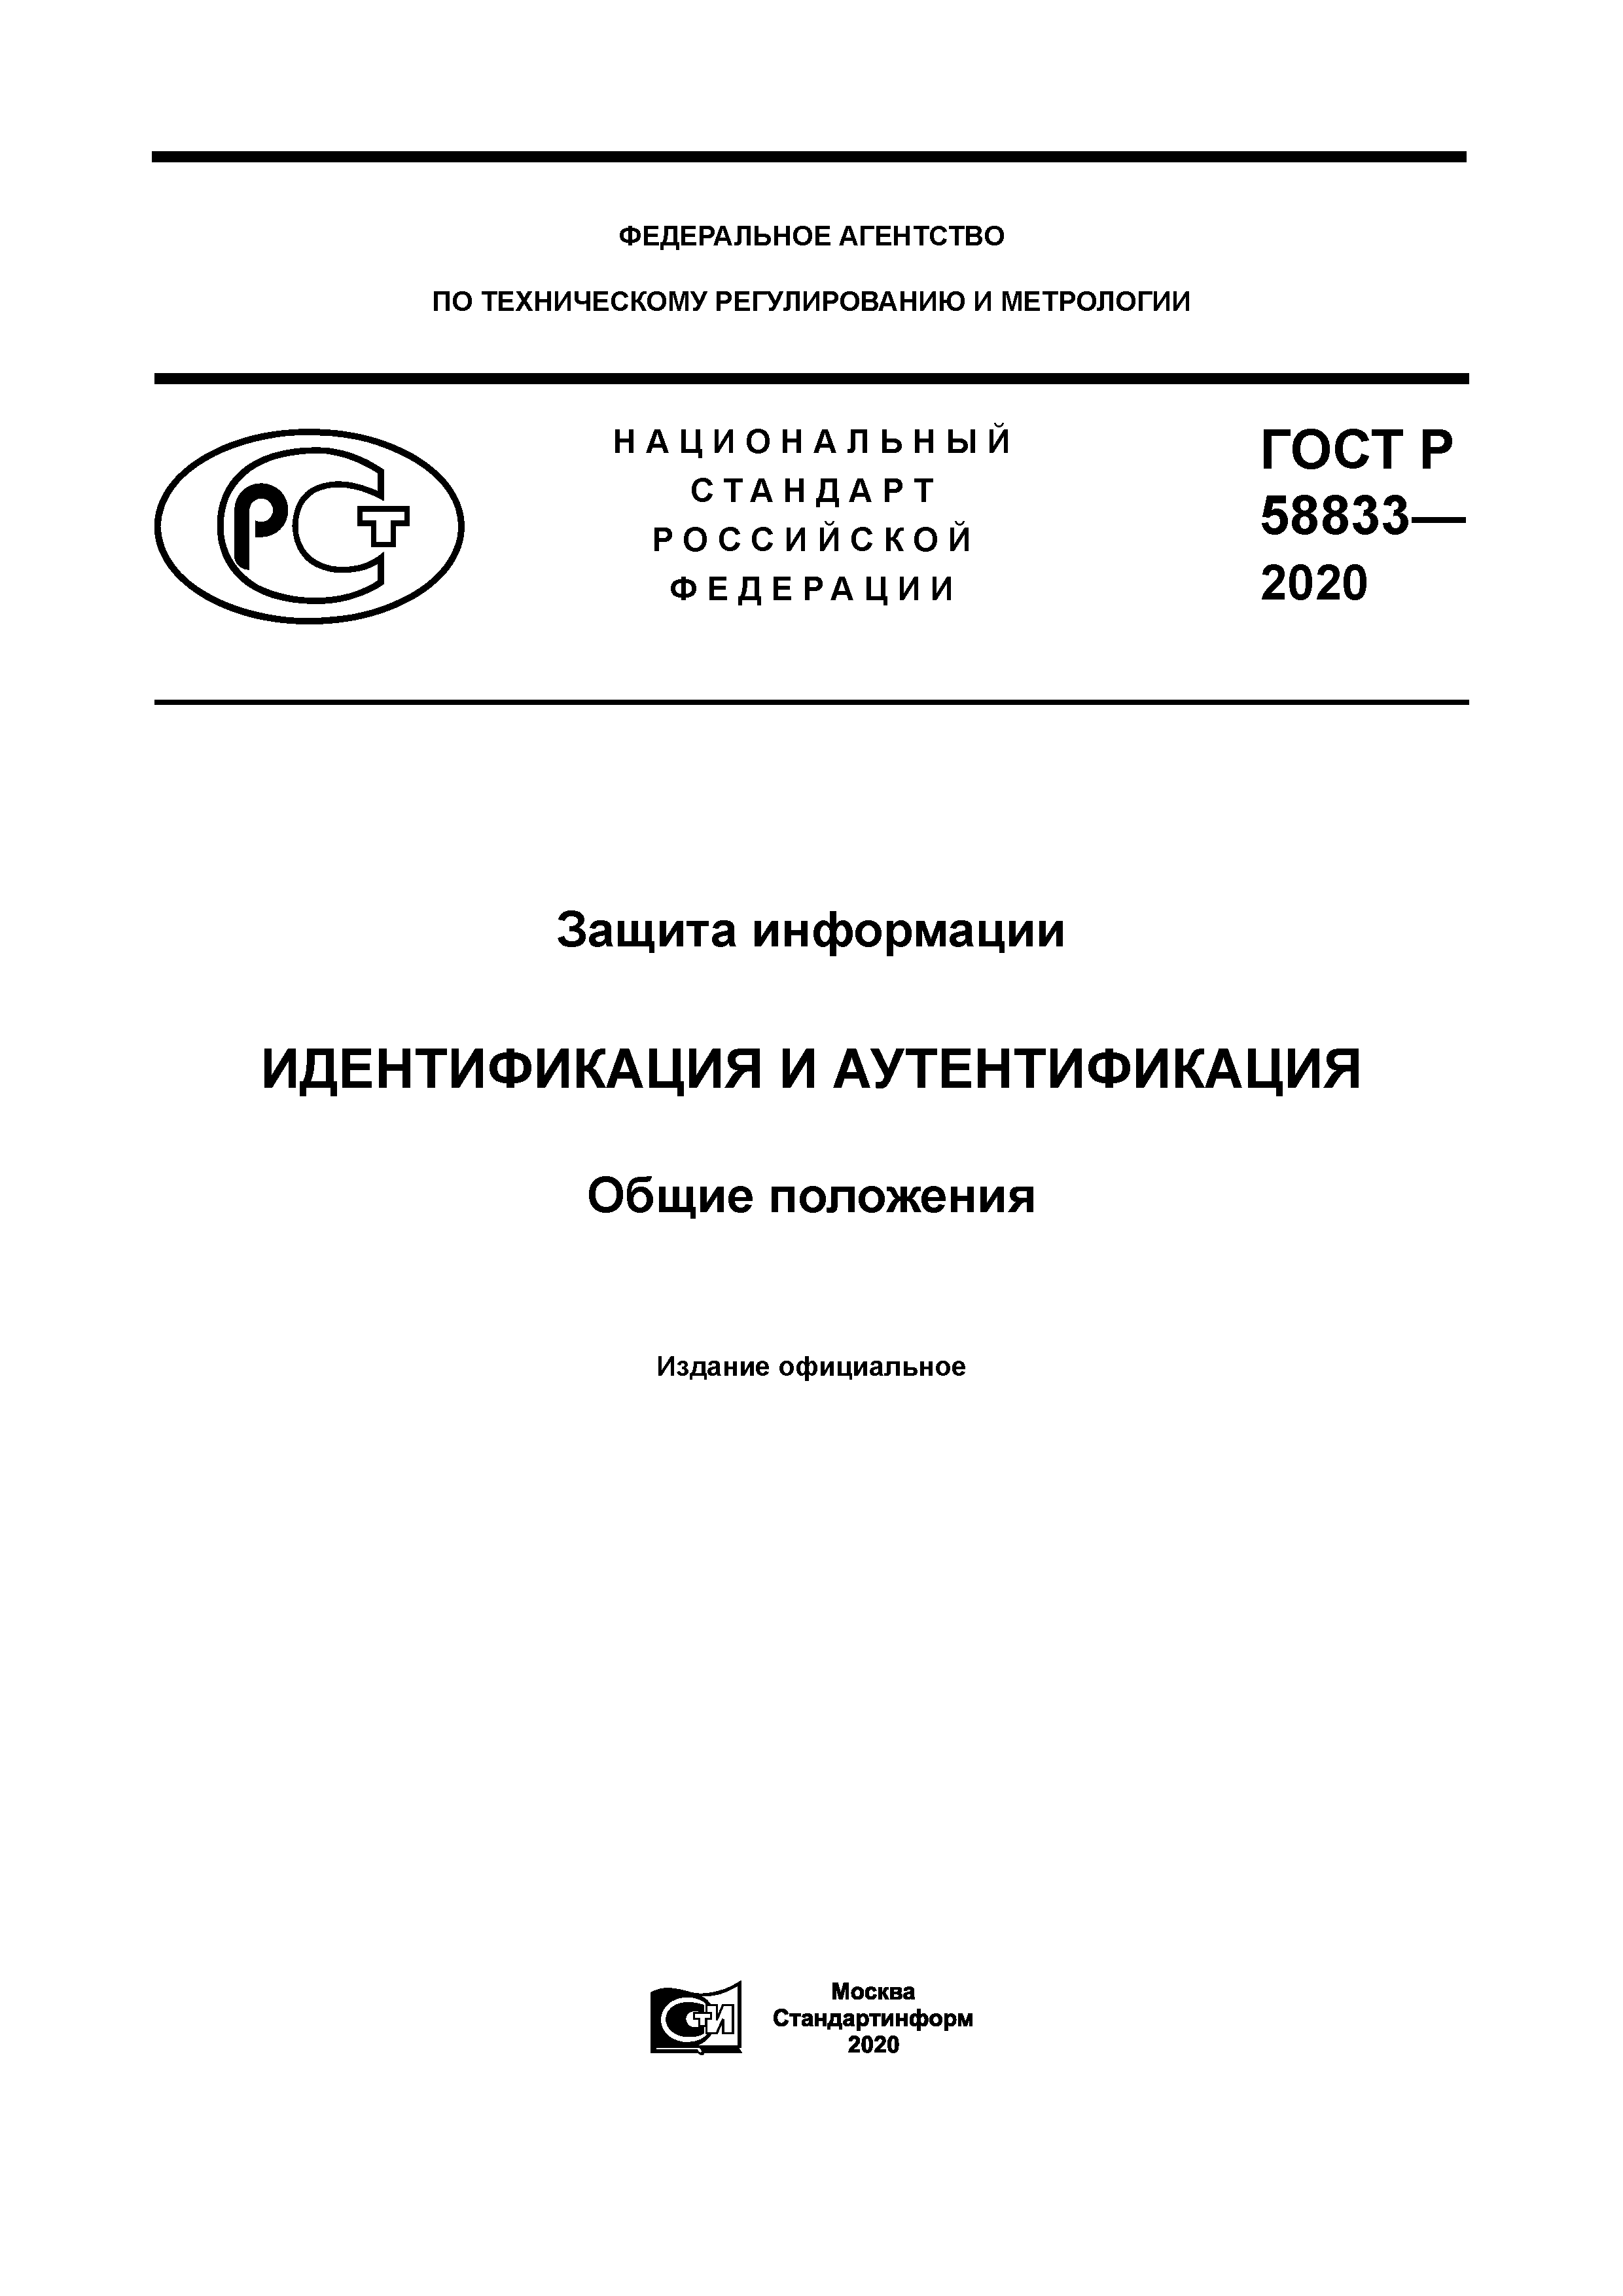 ГОСТ Р 58833-2020